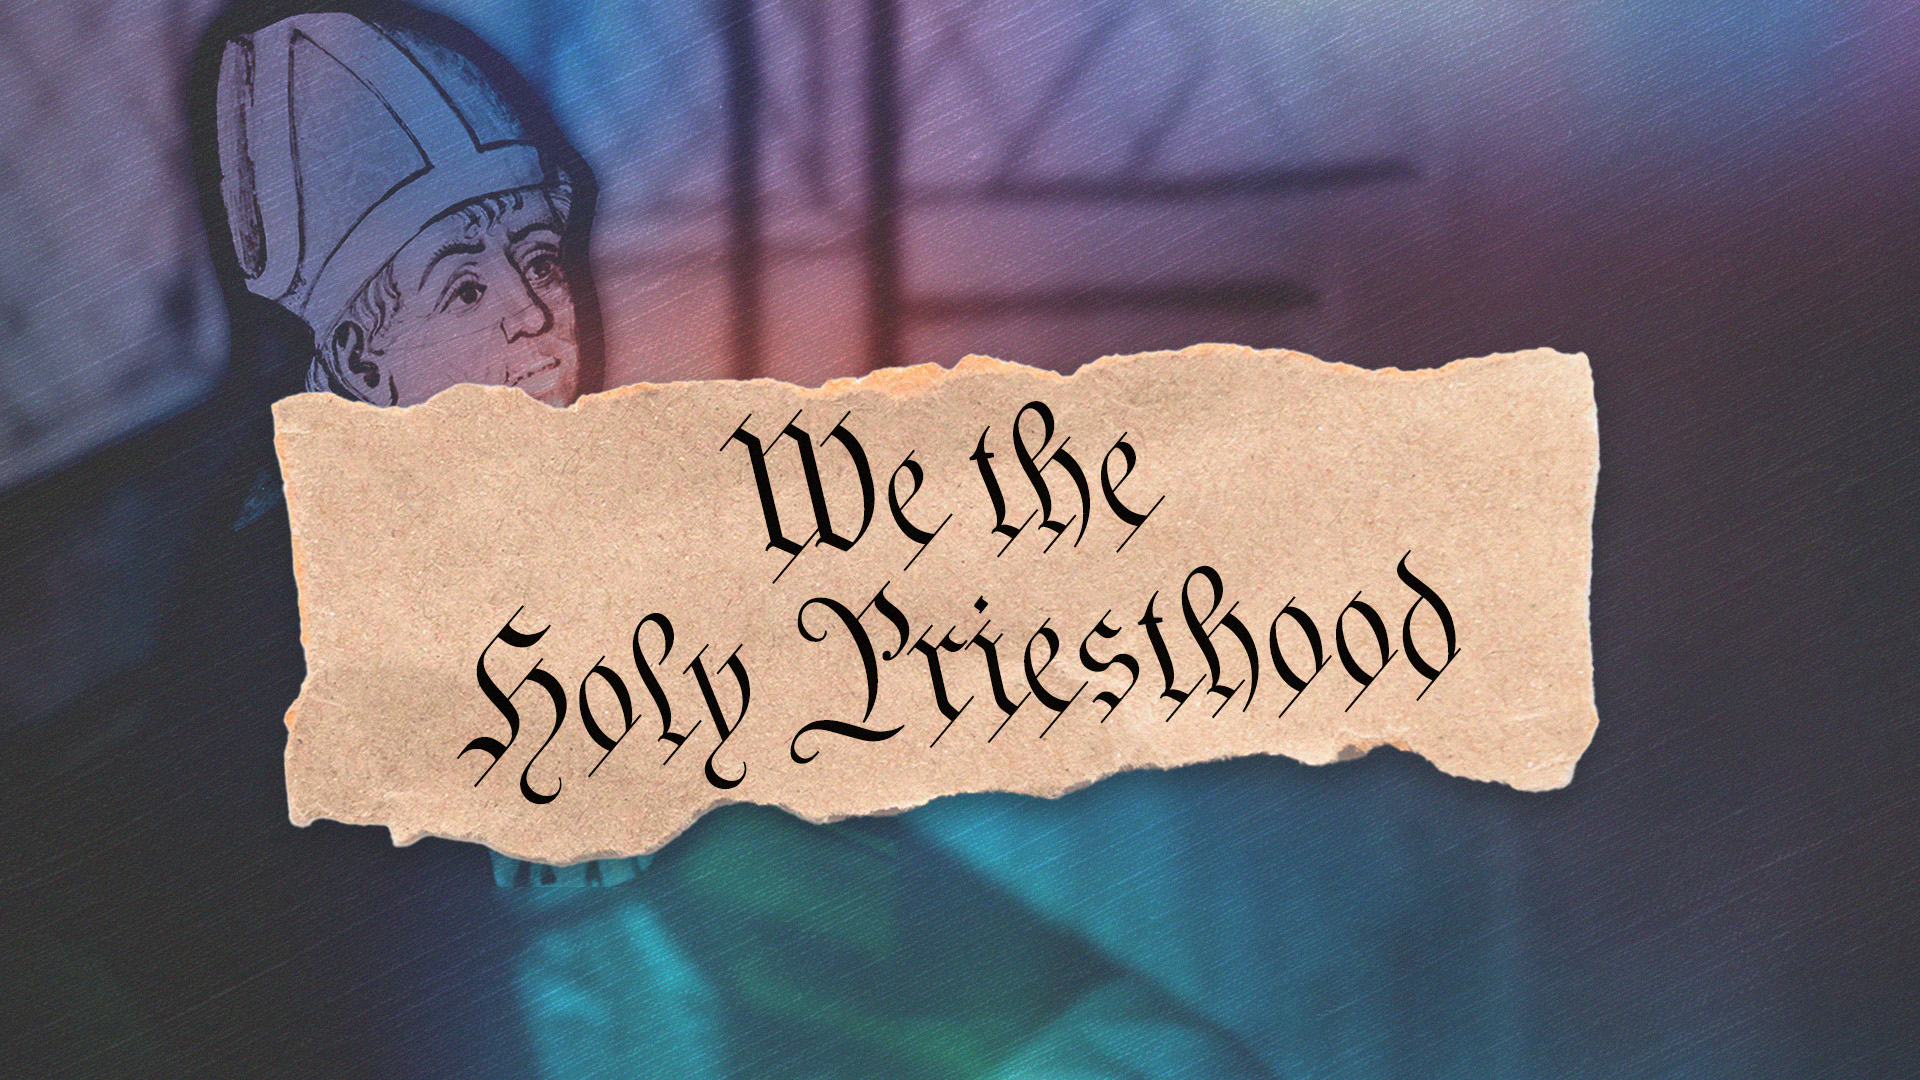 We the Holy Priesthood